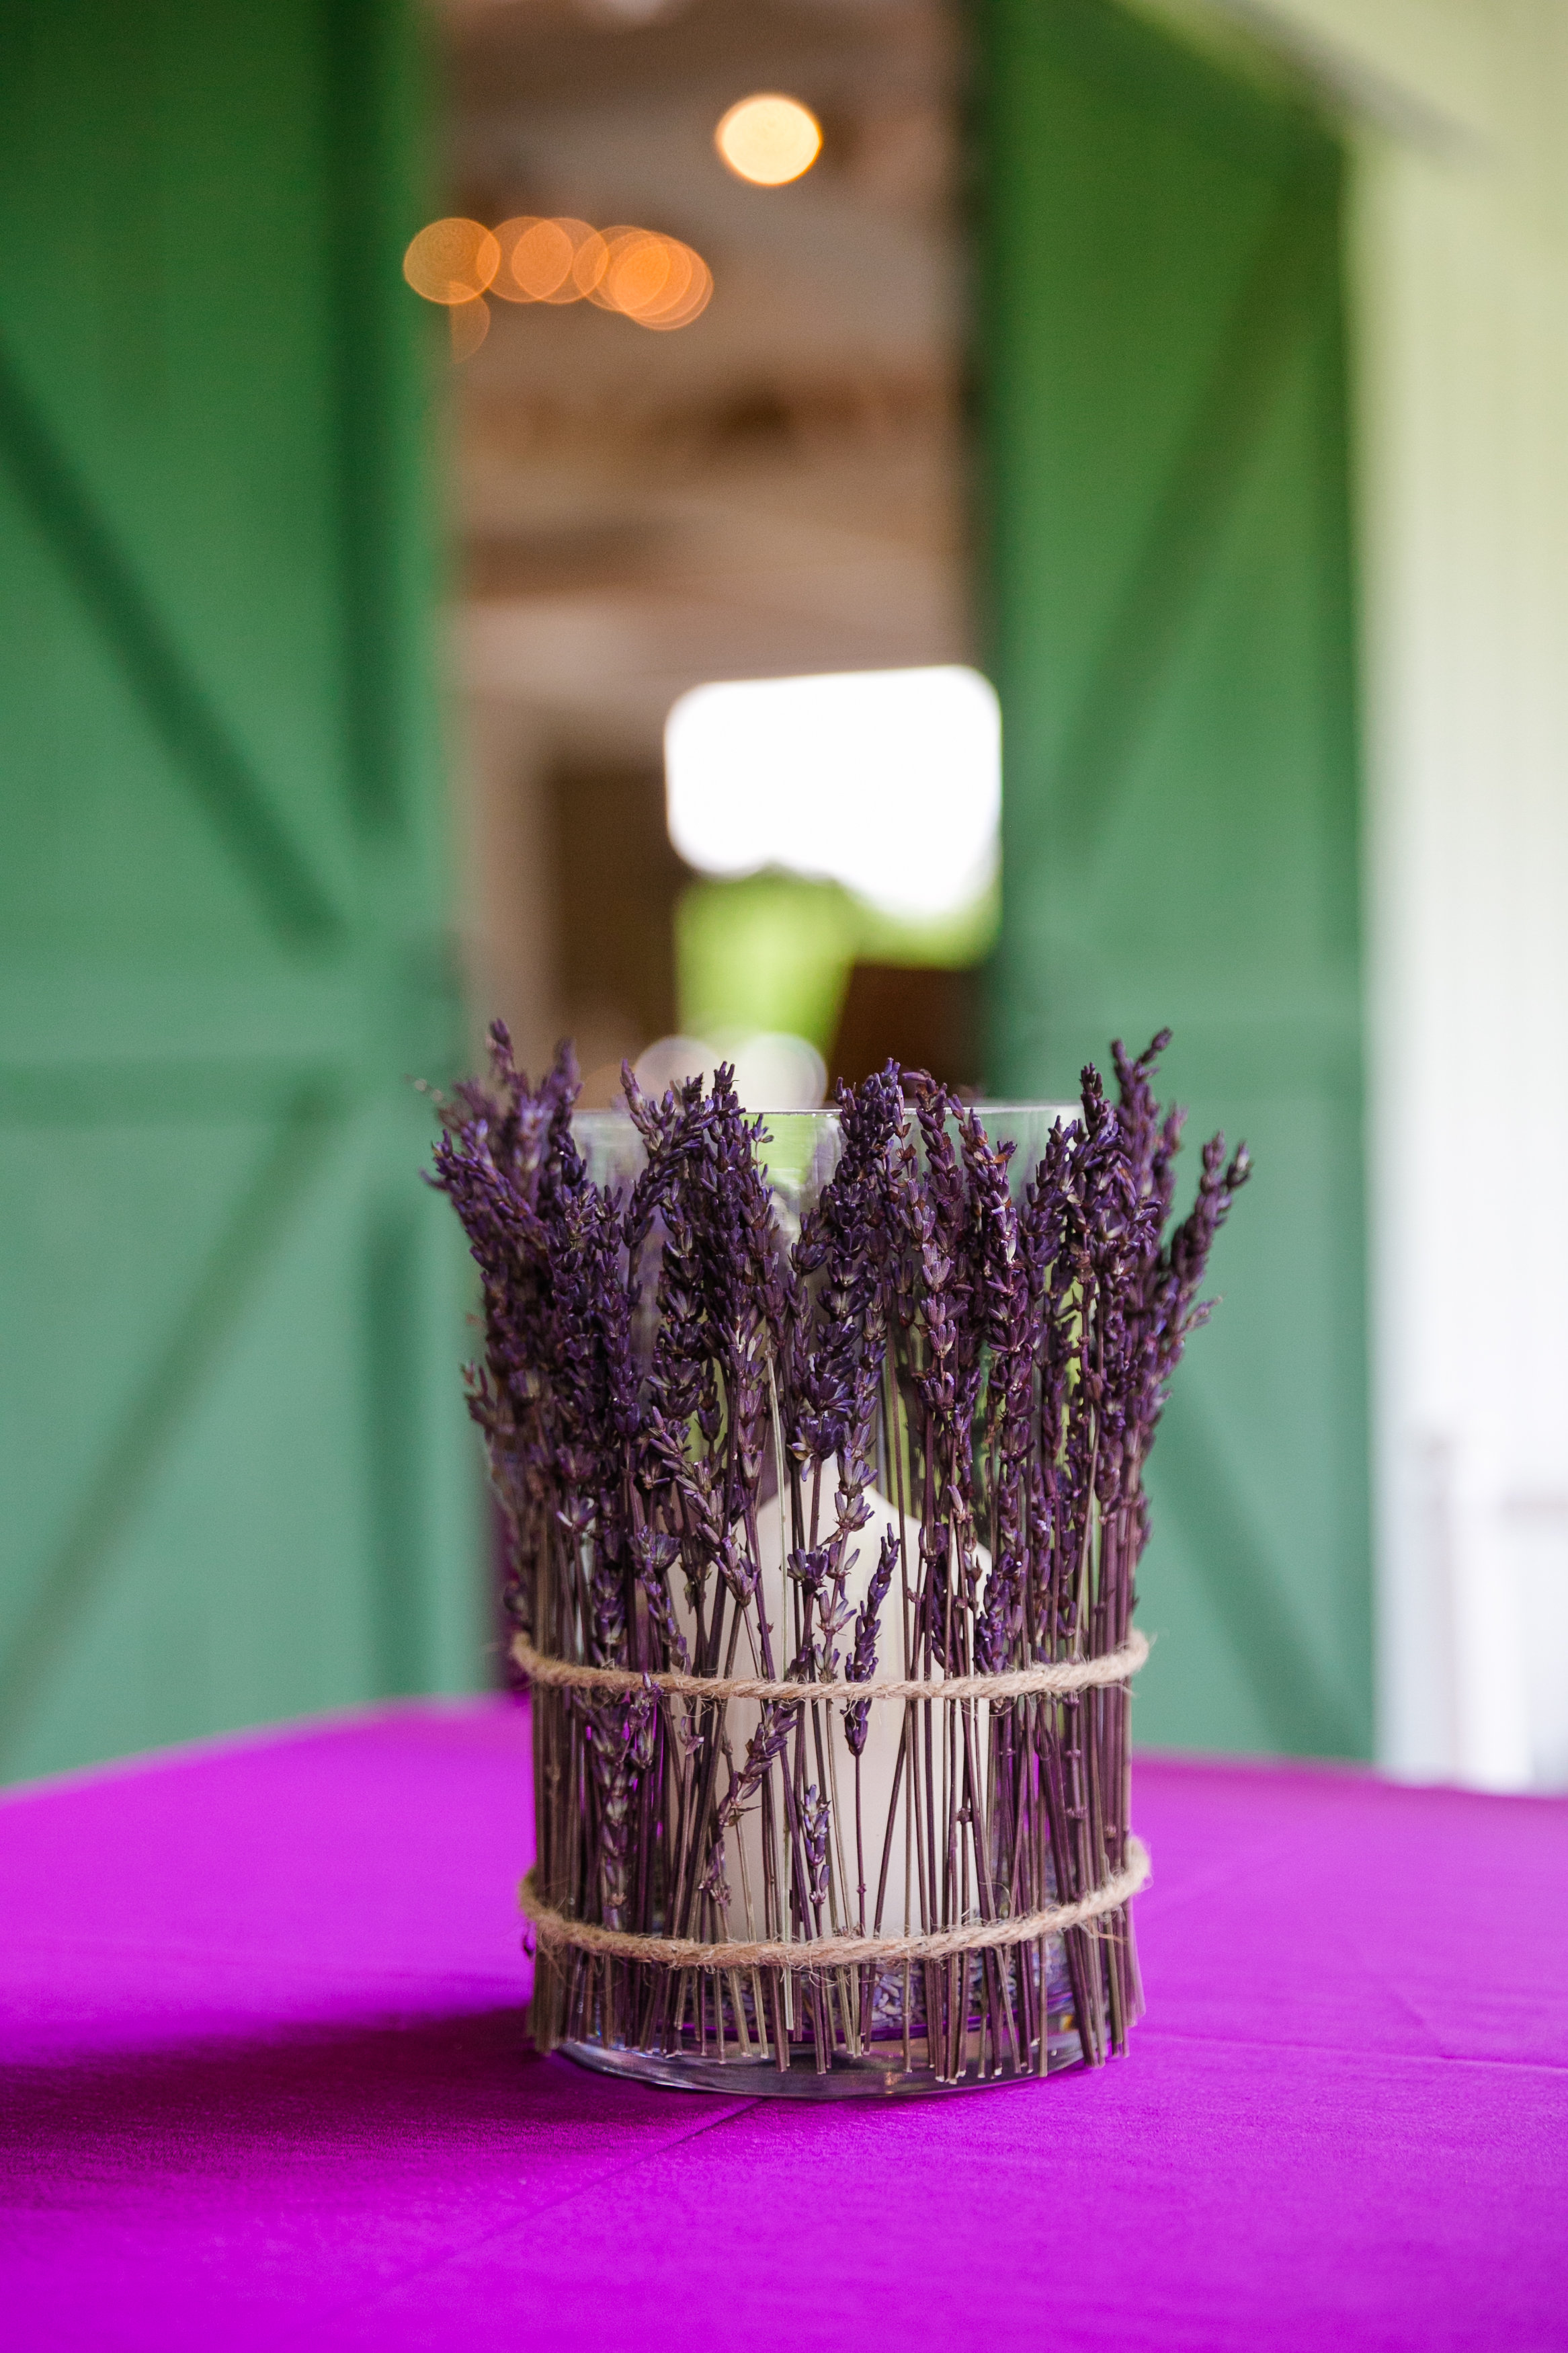 lavender-candle-centerpieces-wedding-reception-barn-decor-rustic-chic-sweetgrass-social-wildberry-farm-dana-cubbage